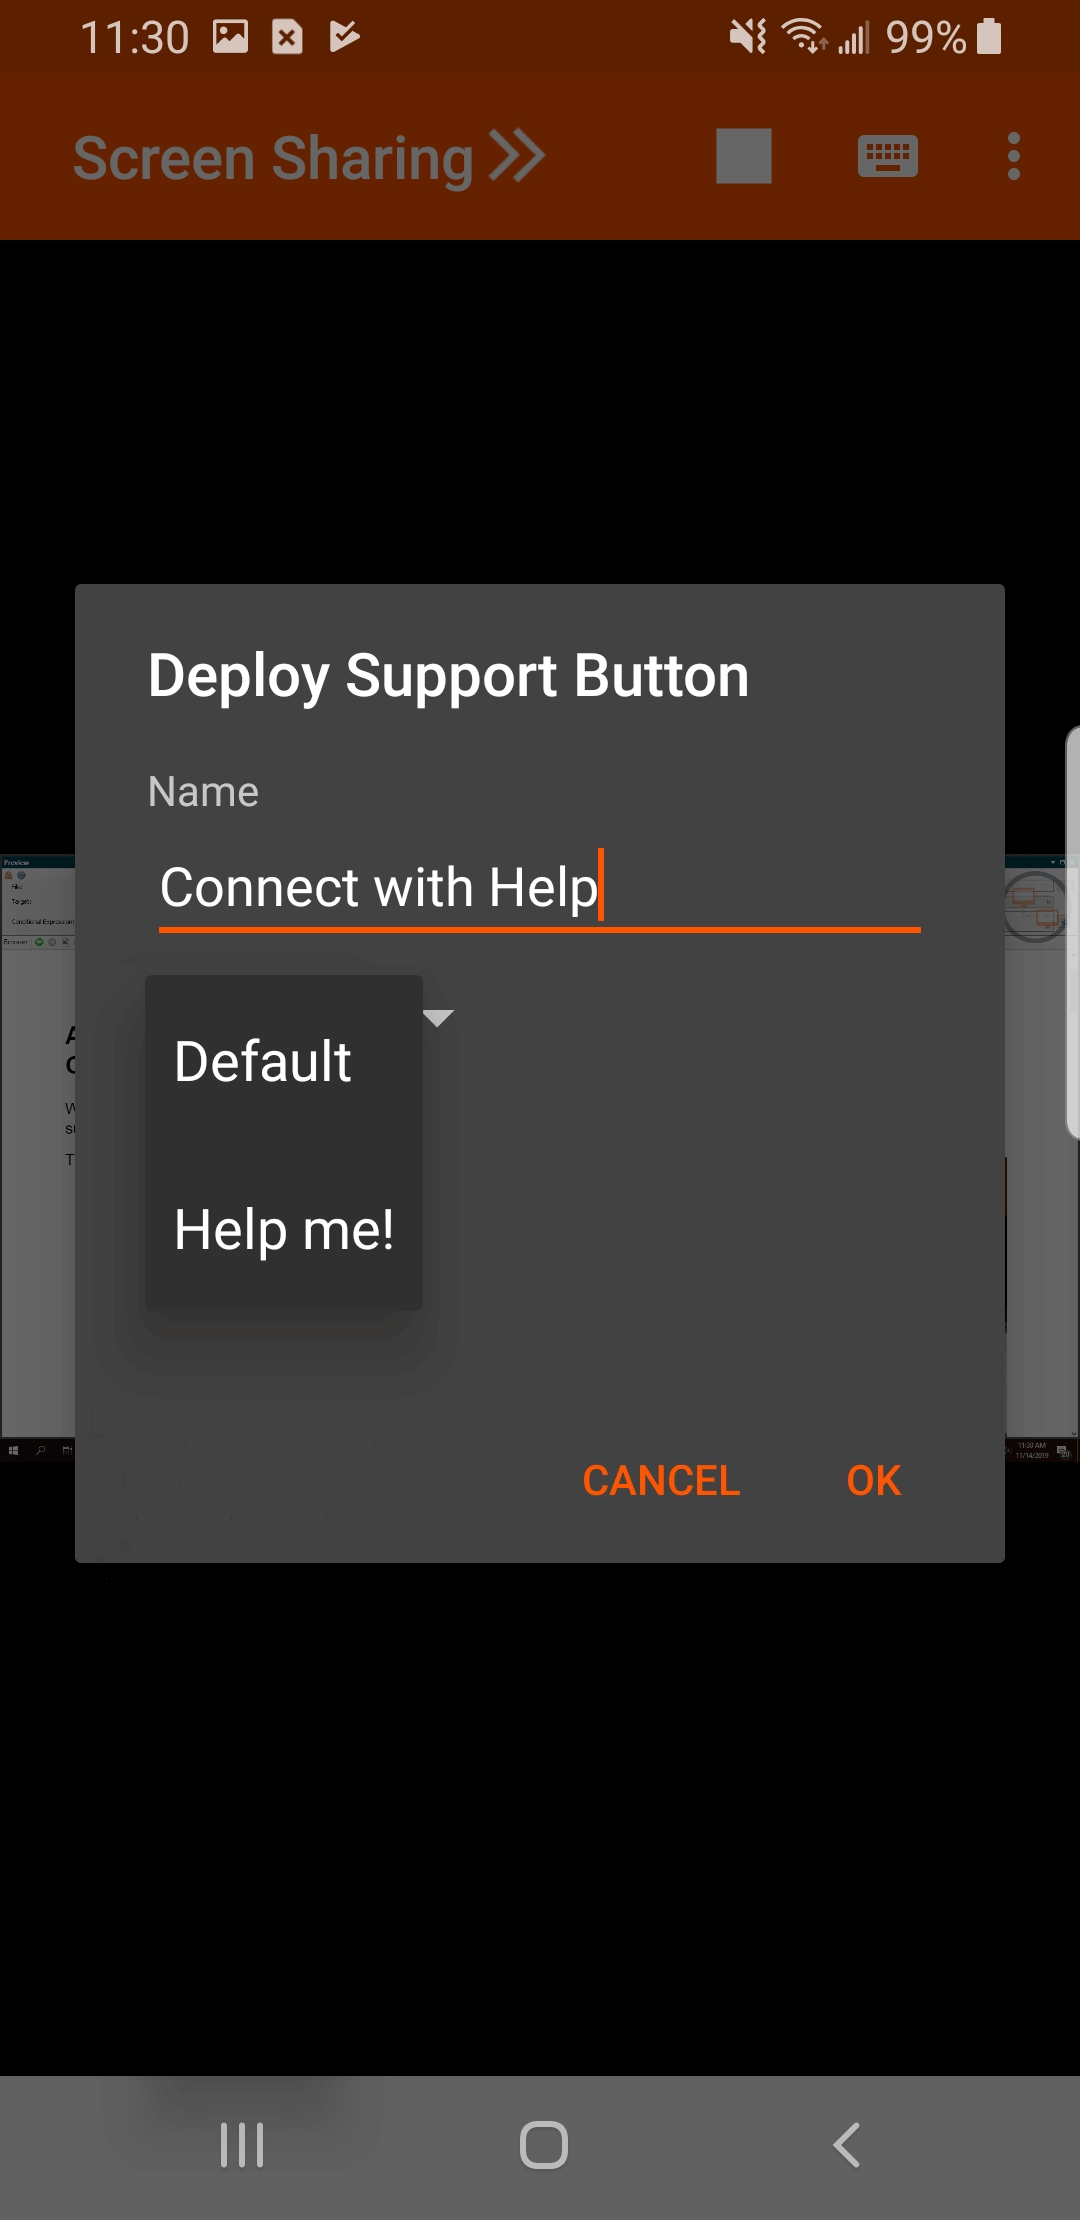 Support Button Profile